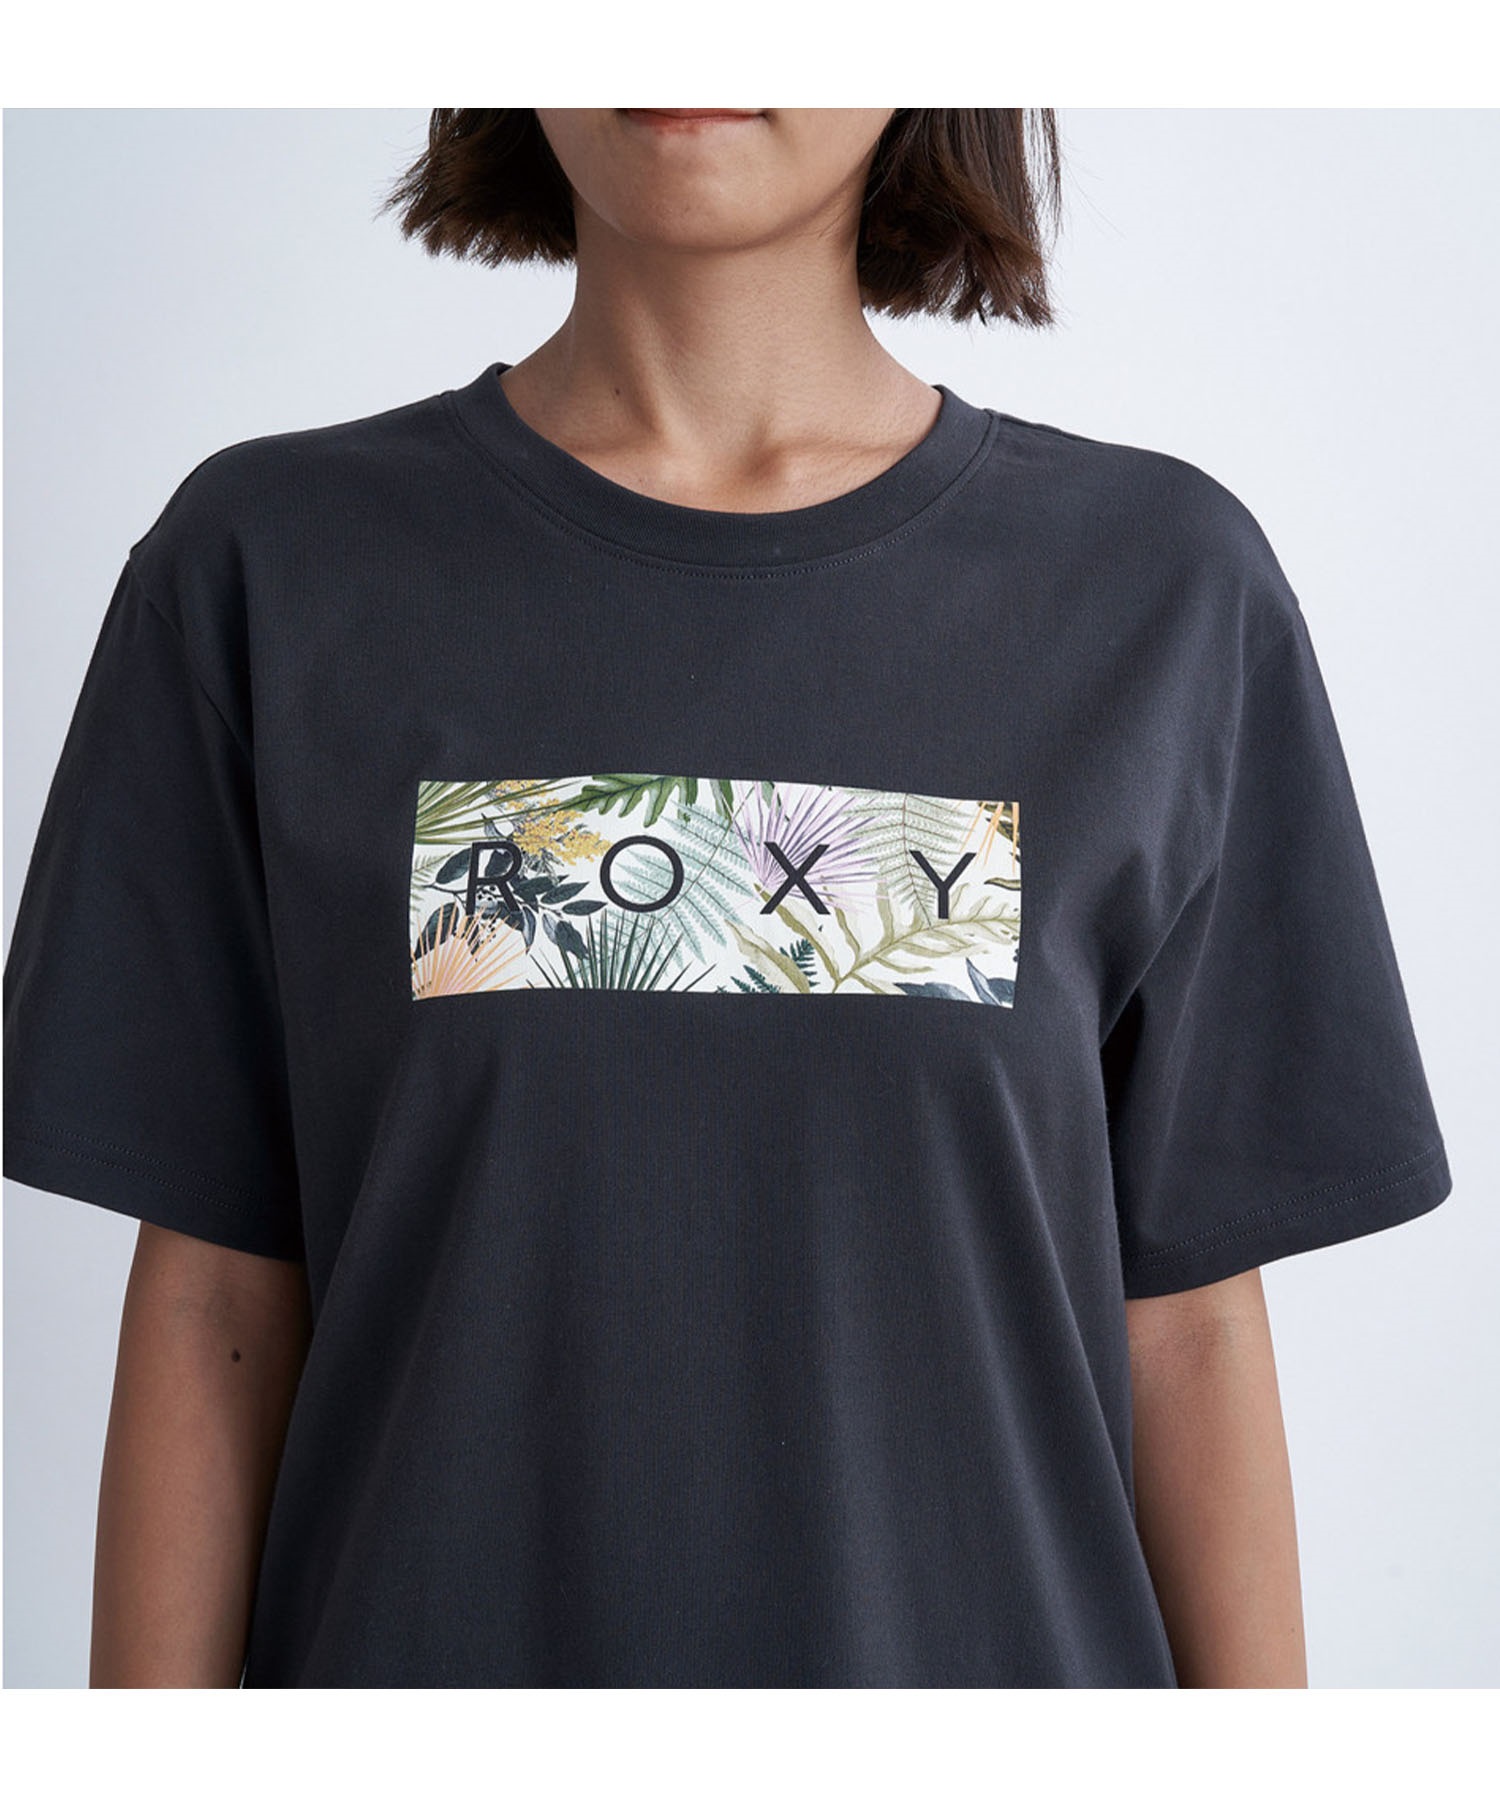 ROXY ロキシー シンプリーボタニカルティーシャツ レディース 半袖 Tシャツ クルーネック RST241075(WHT-S)